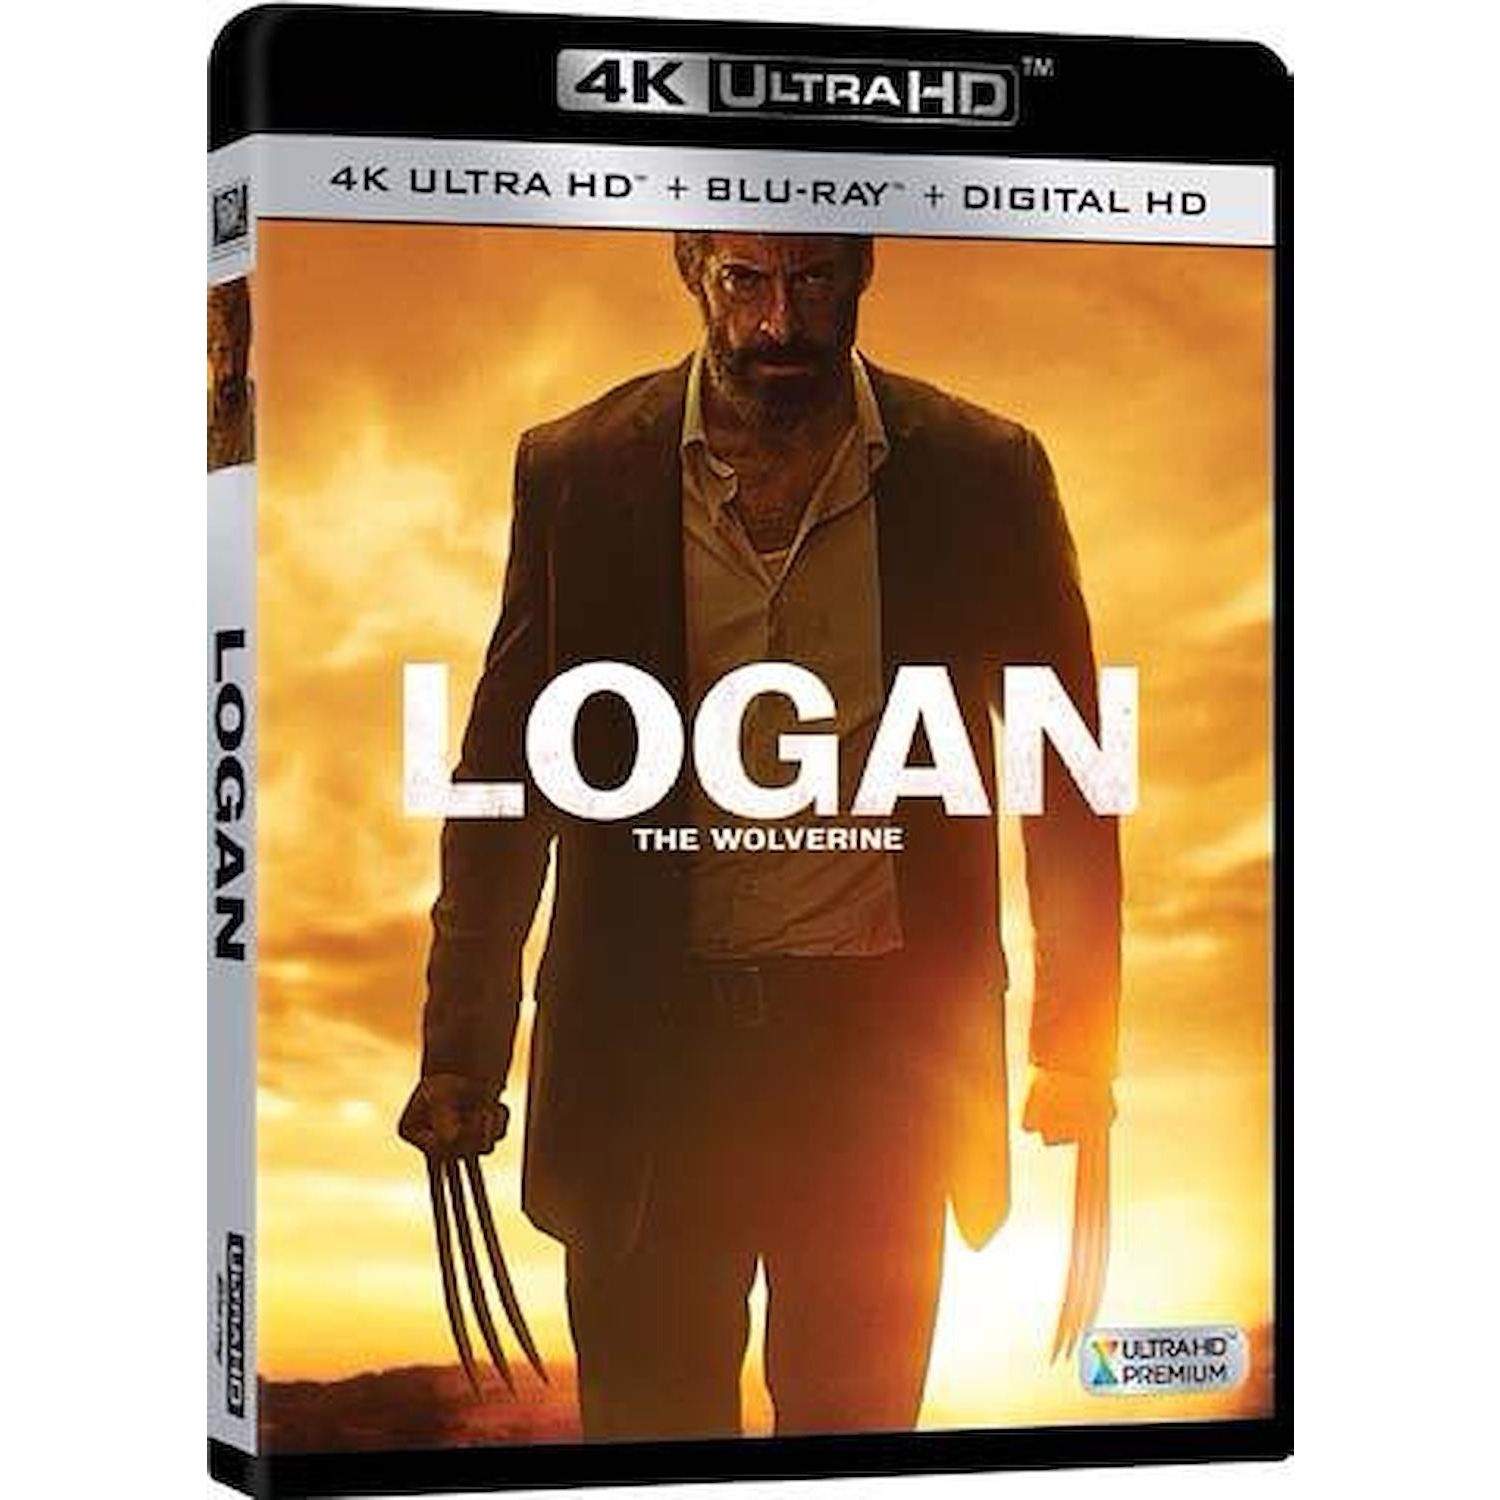 Immagine per Blu-ray 4K Logan the Wolverine da DIMOStore